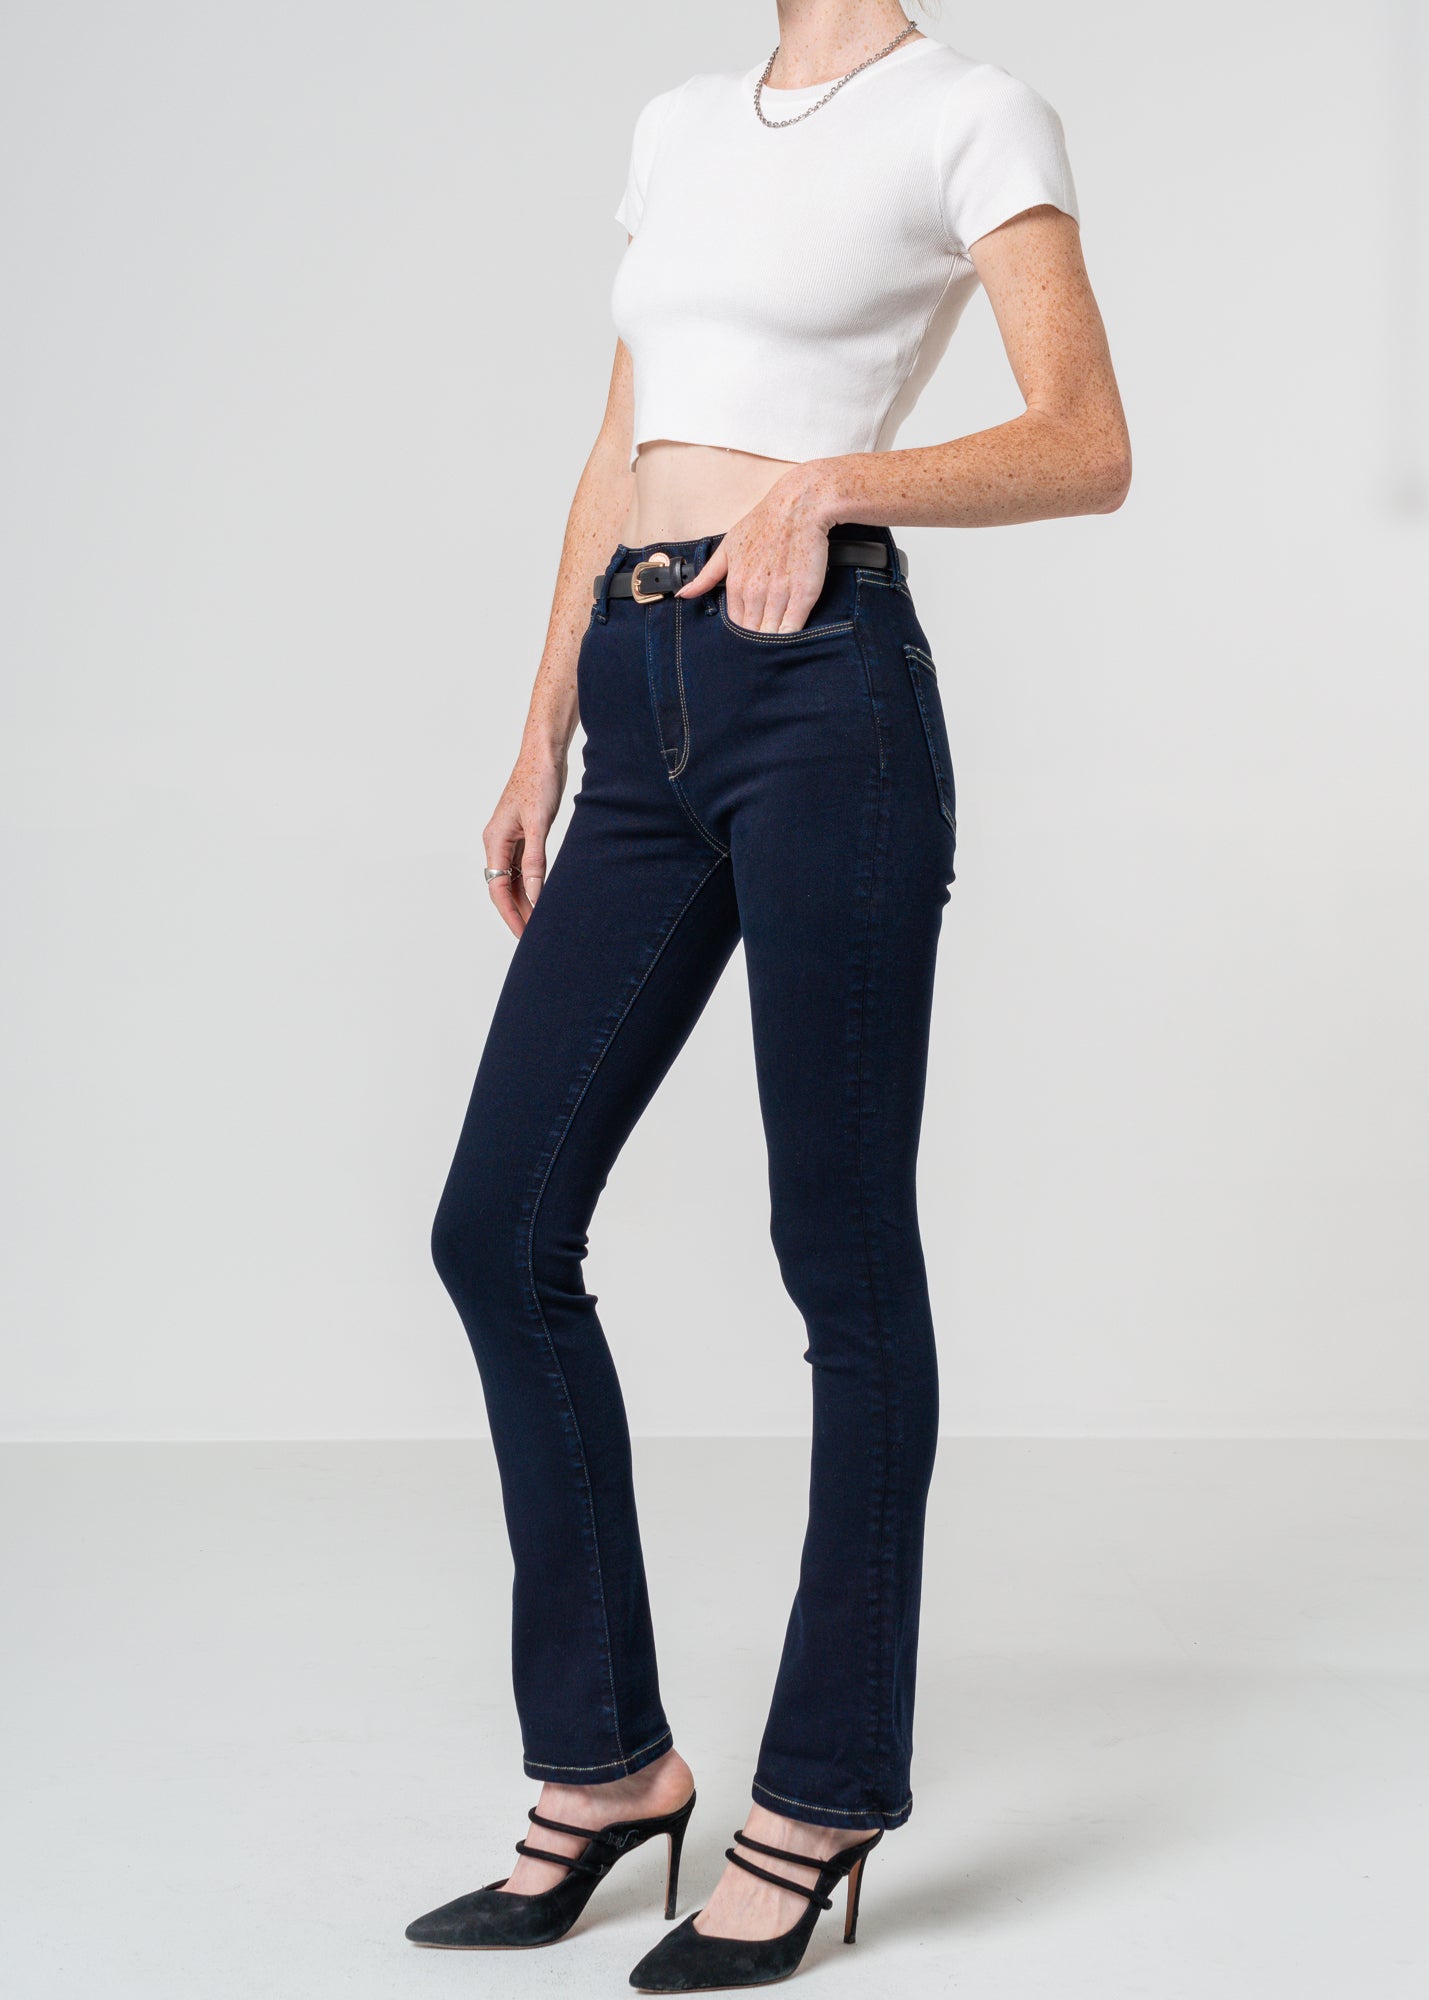 Shop Noend Denim | Explore Premium Women's Jeans Made in USA